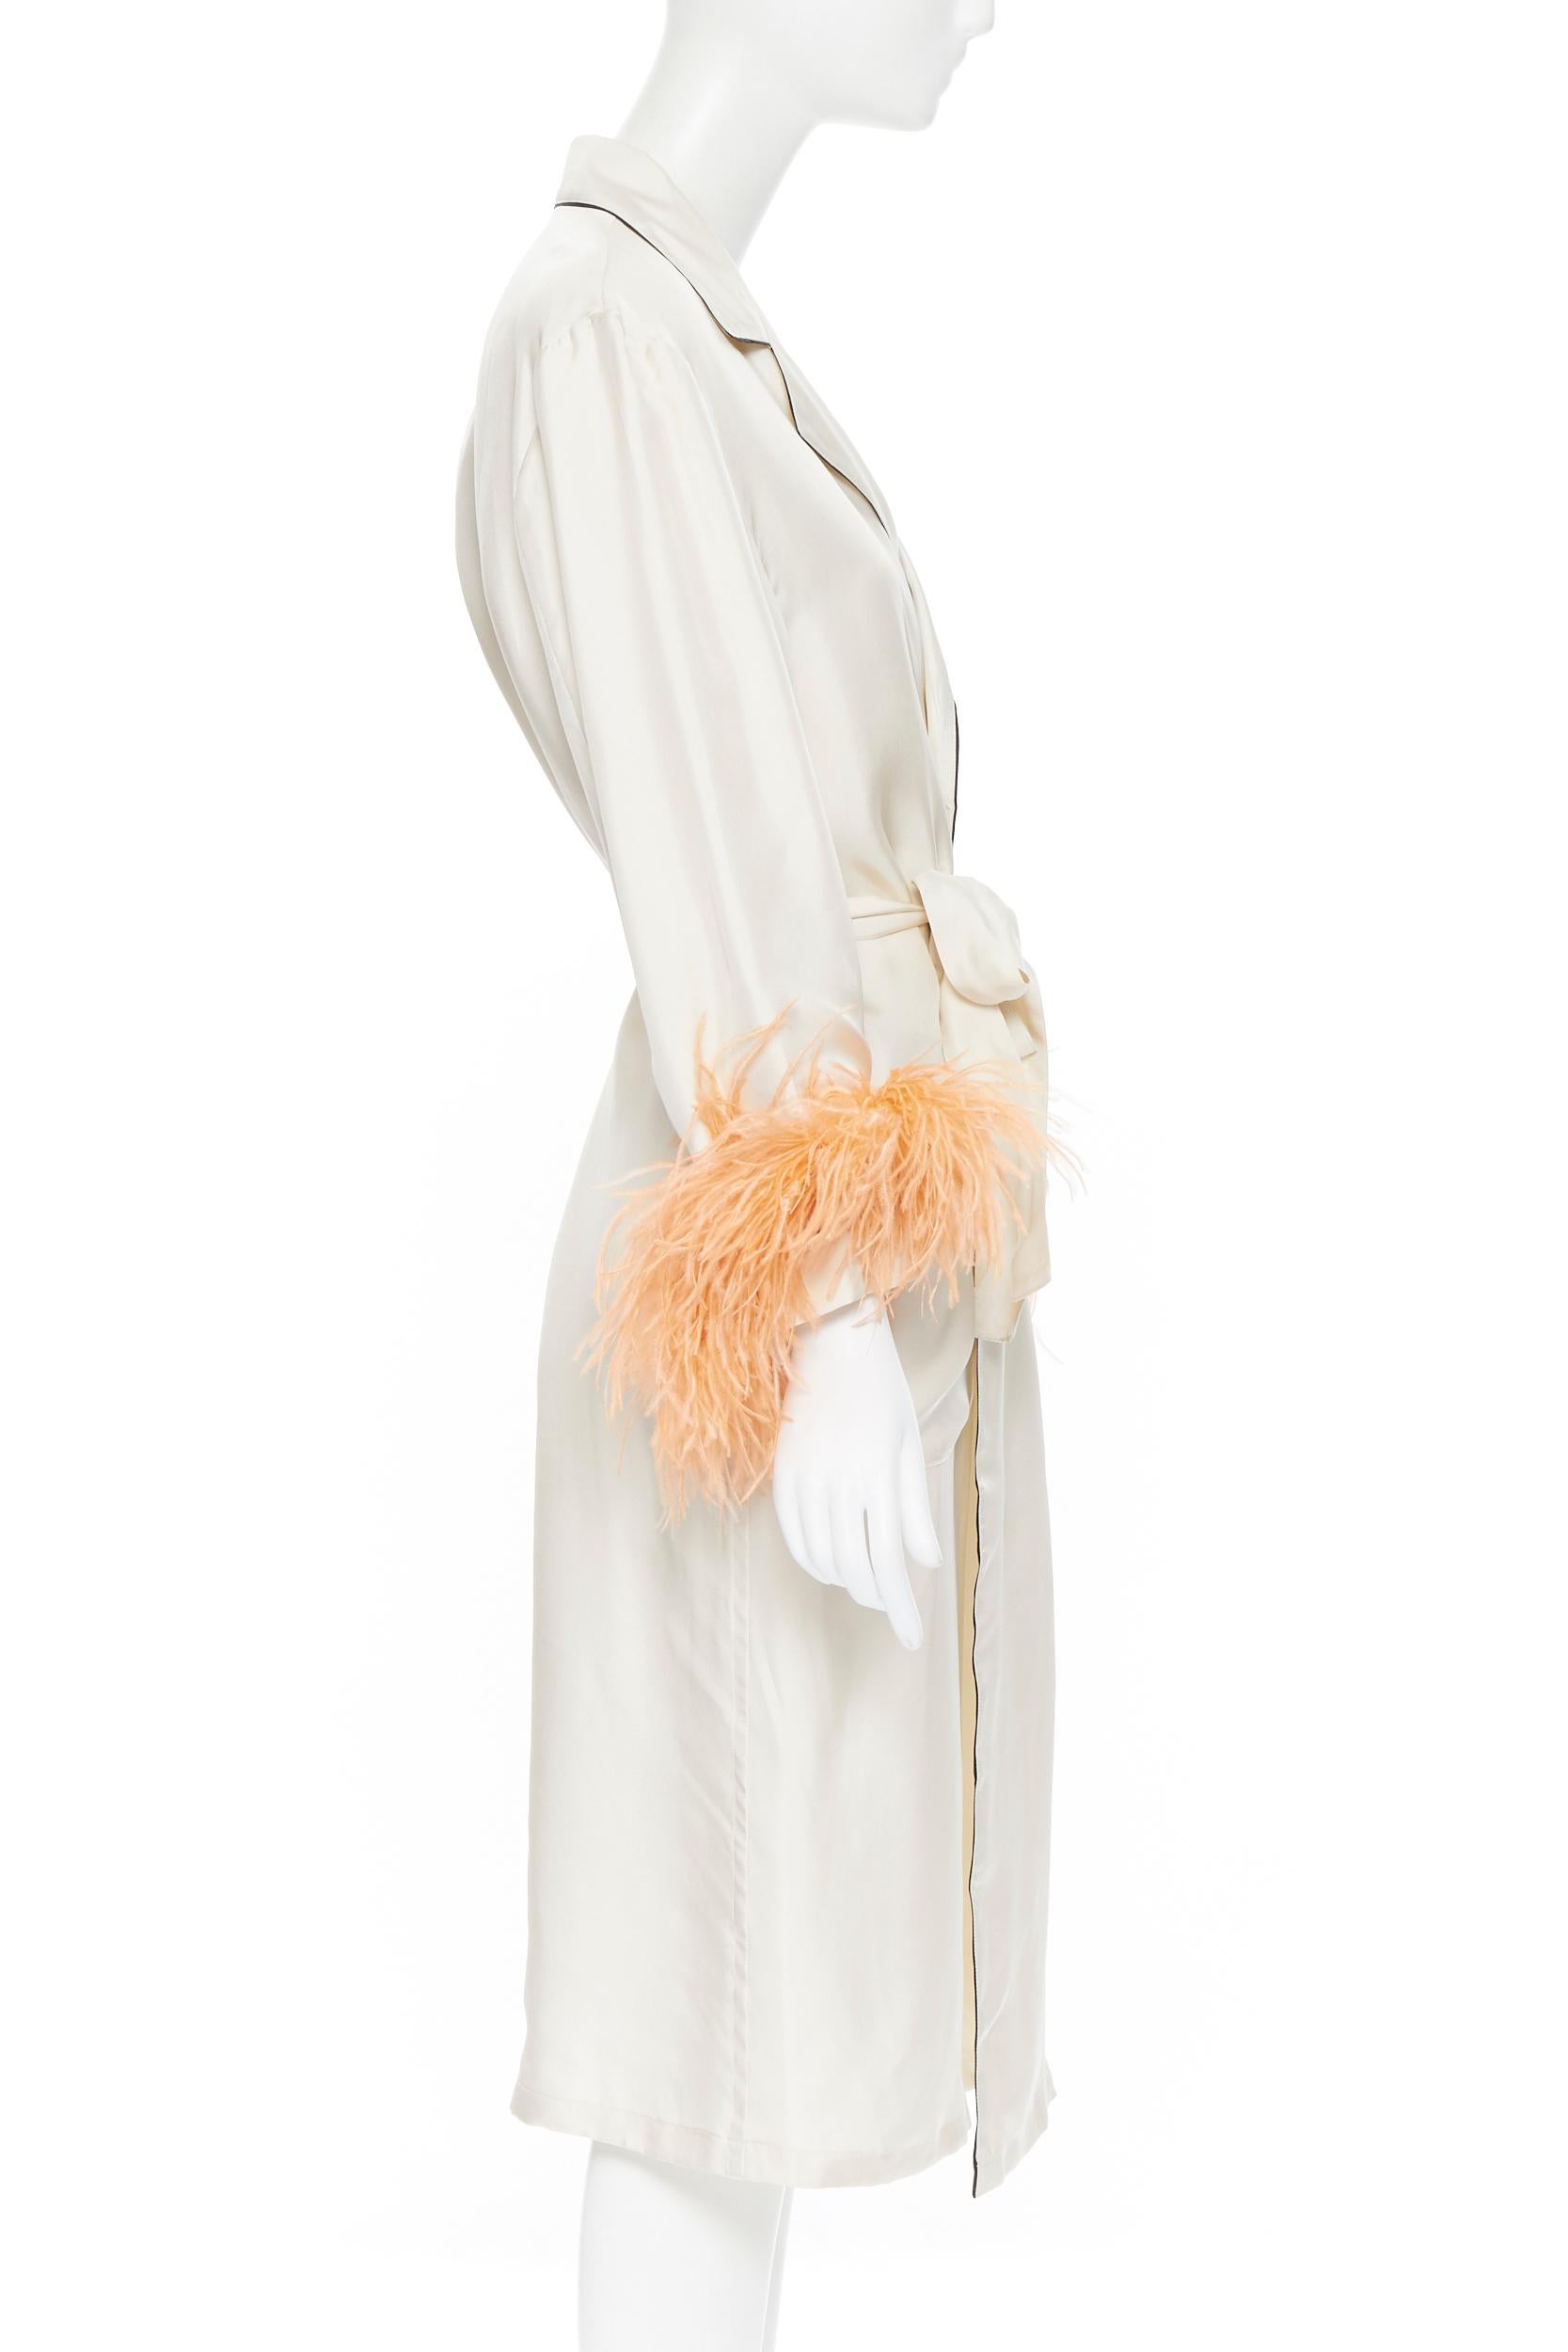 Beige new PRADA 100% silk beige black piping orange feather cuff robe coat Rihanna M